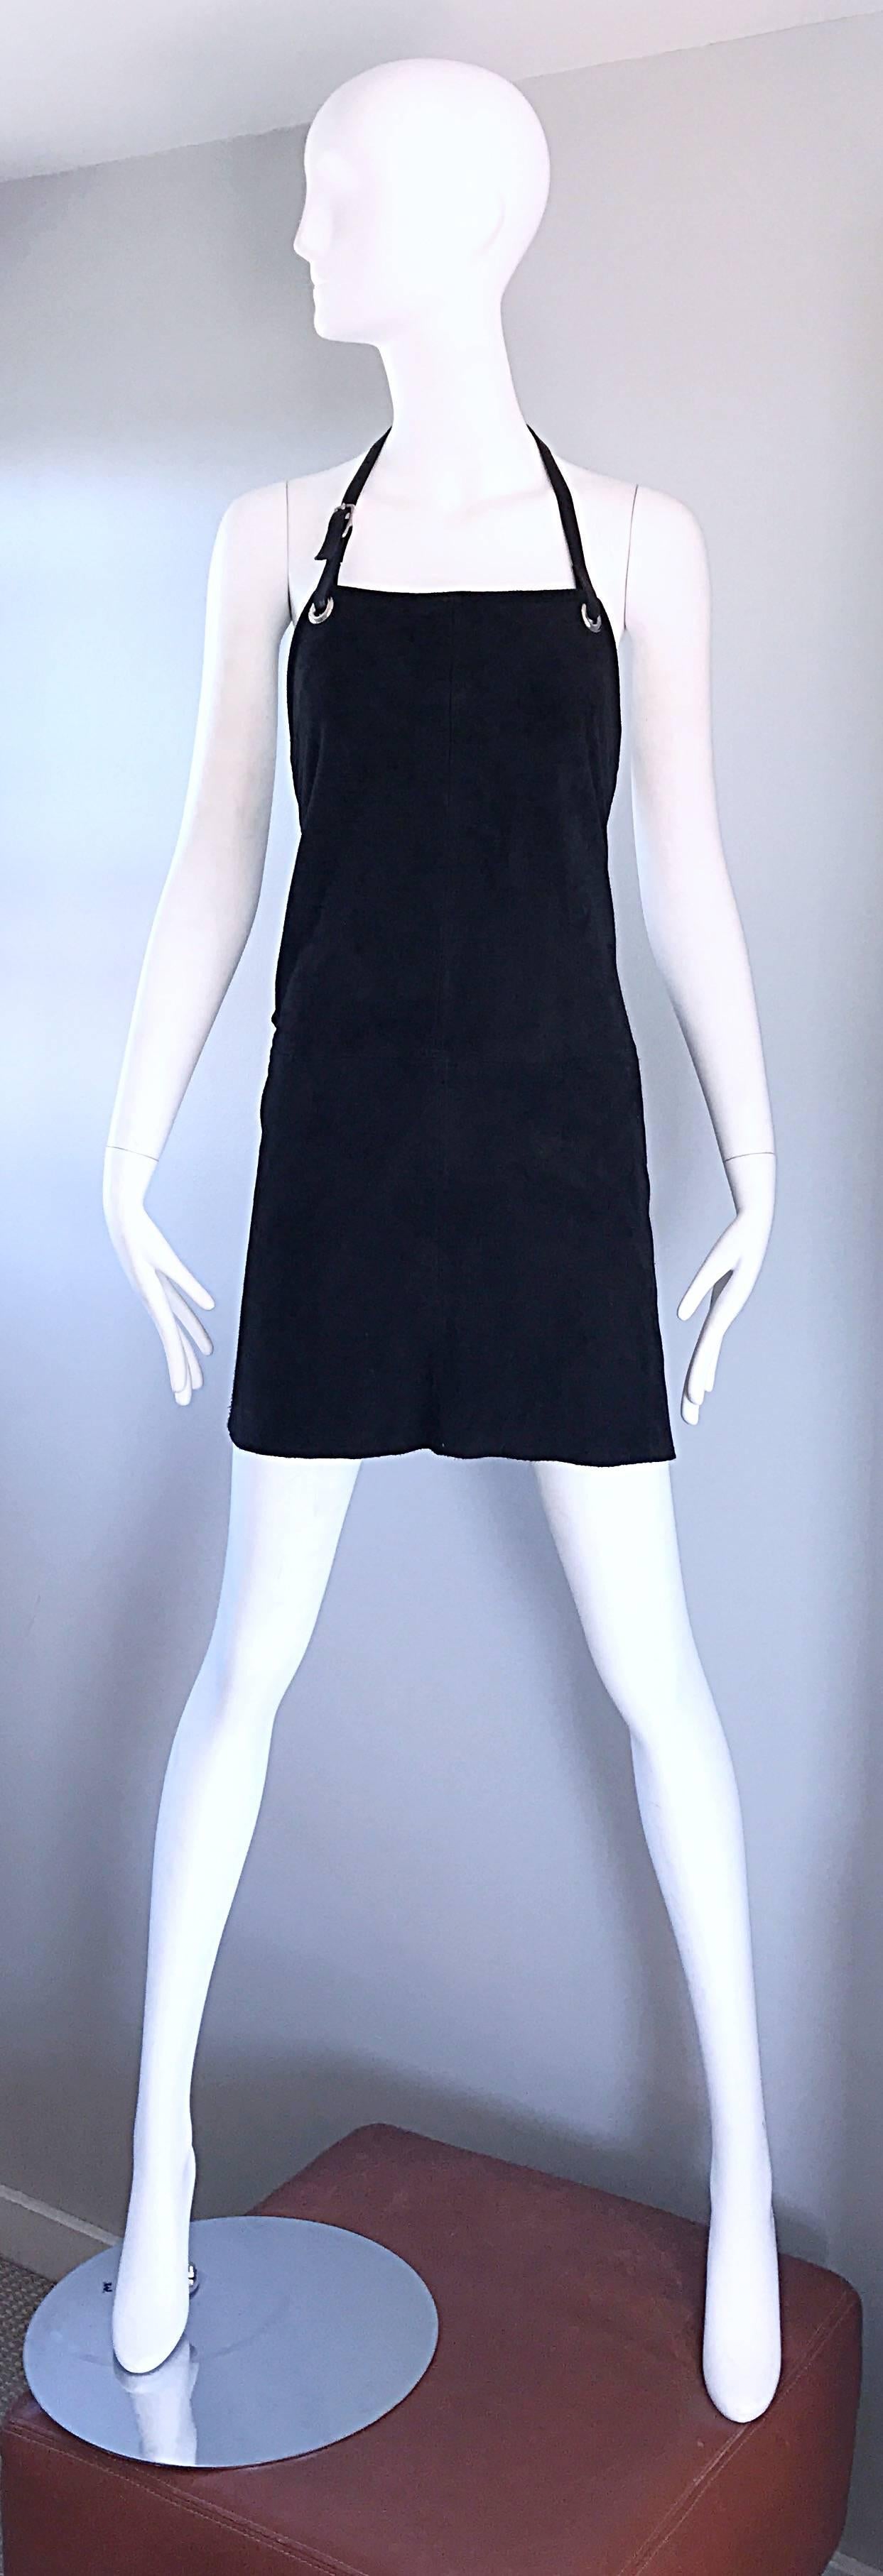 Helmut Lang Early 1990s Rare Black Leather Suede Apron Halter Dress Vintage 90s For Sale 3